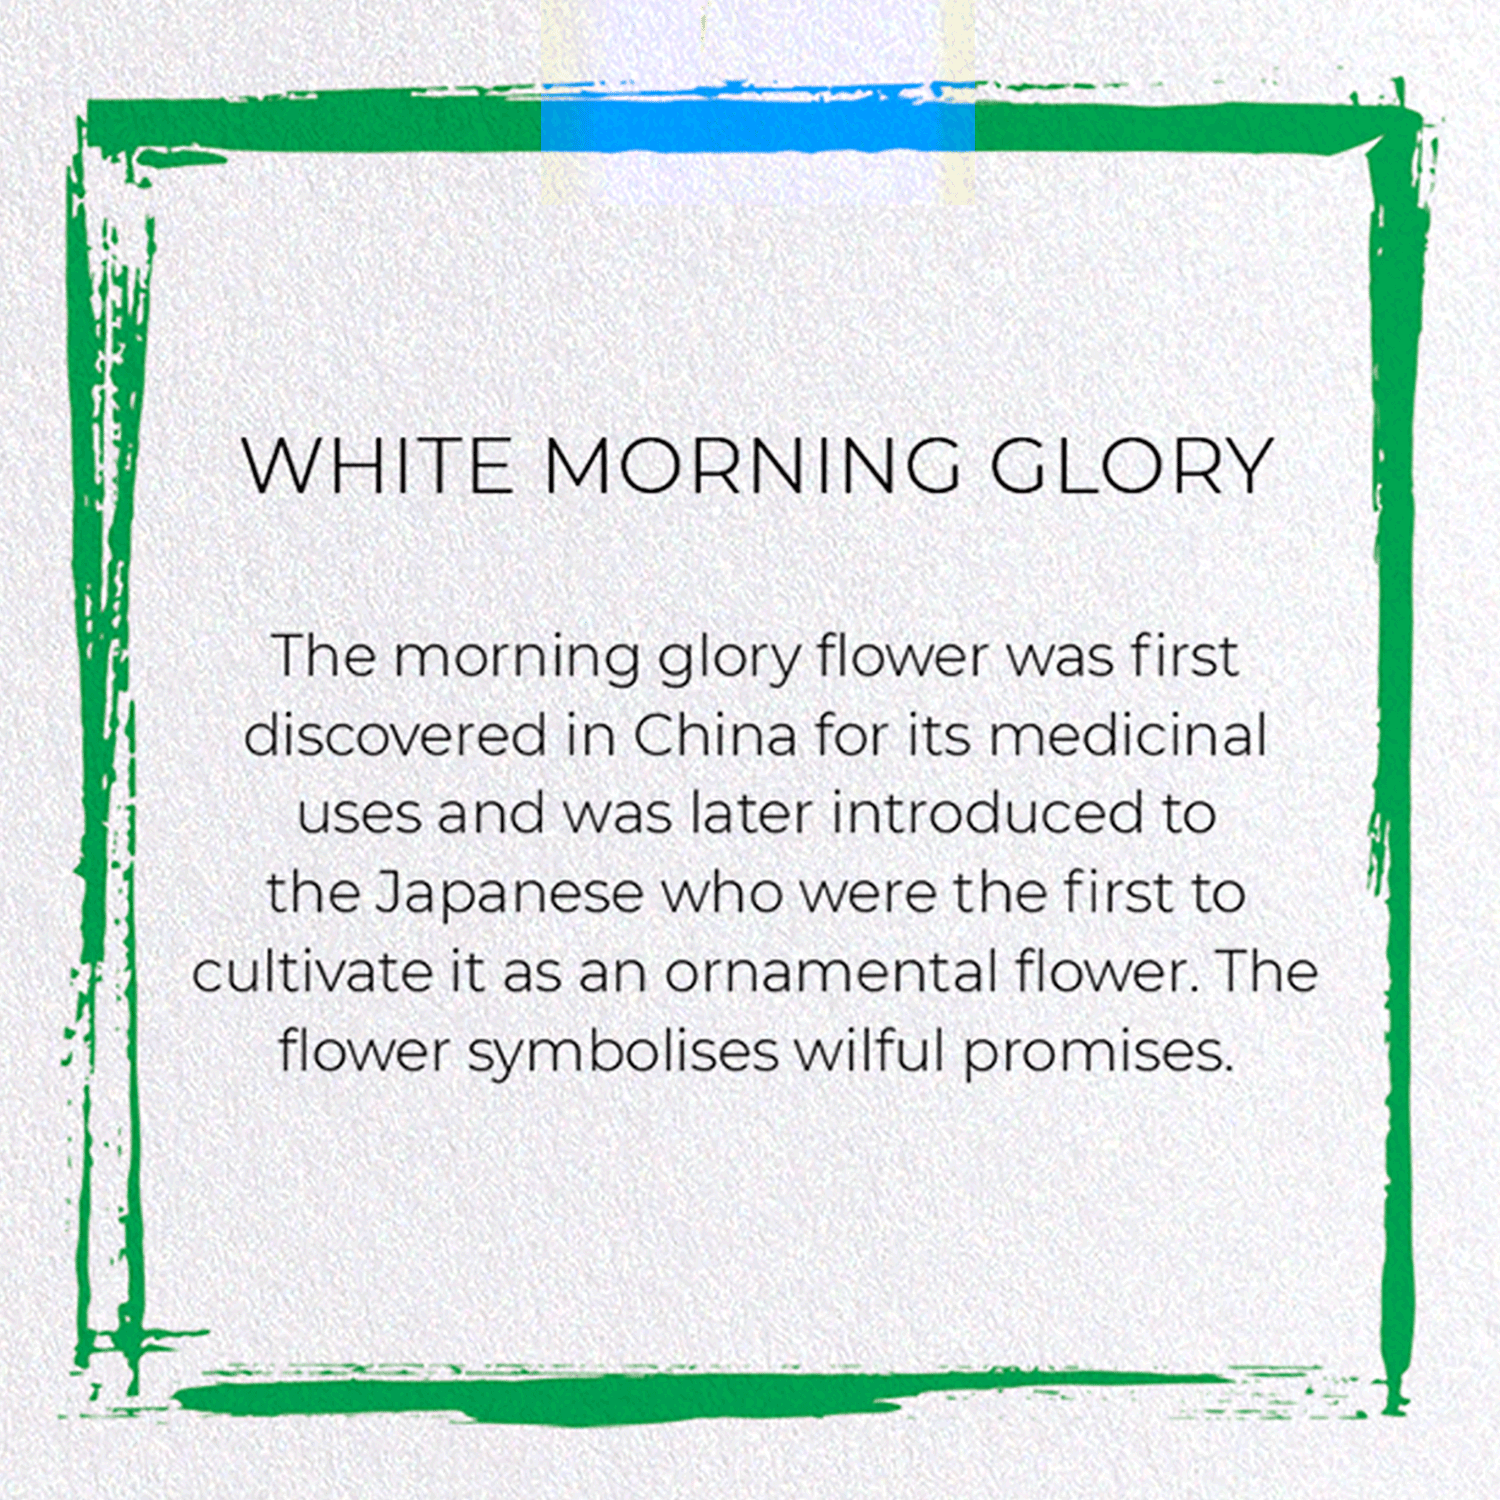 WHITE MORNING GLORY